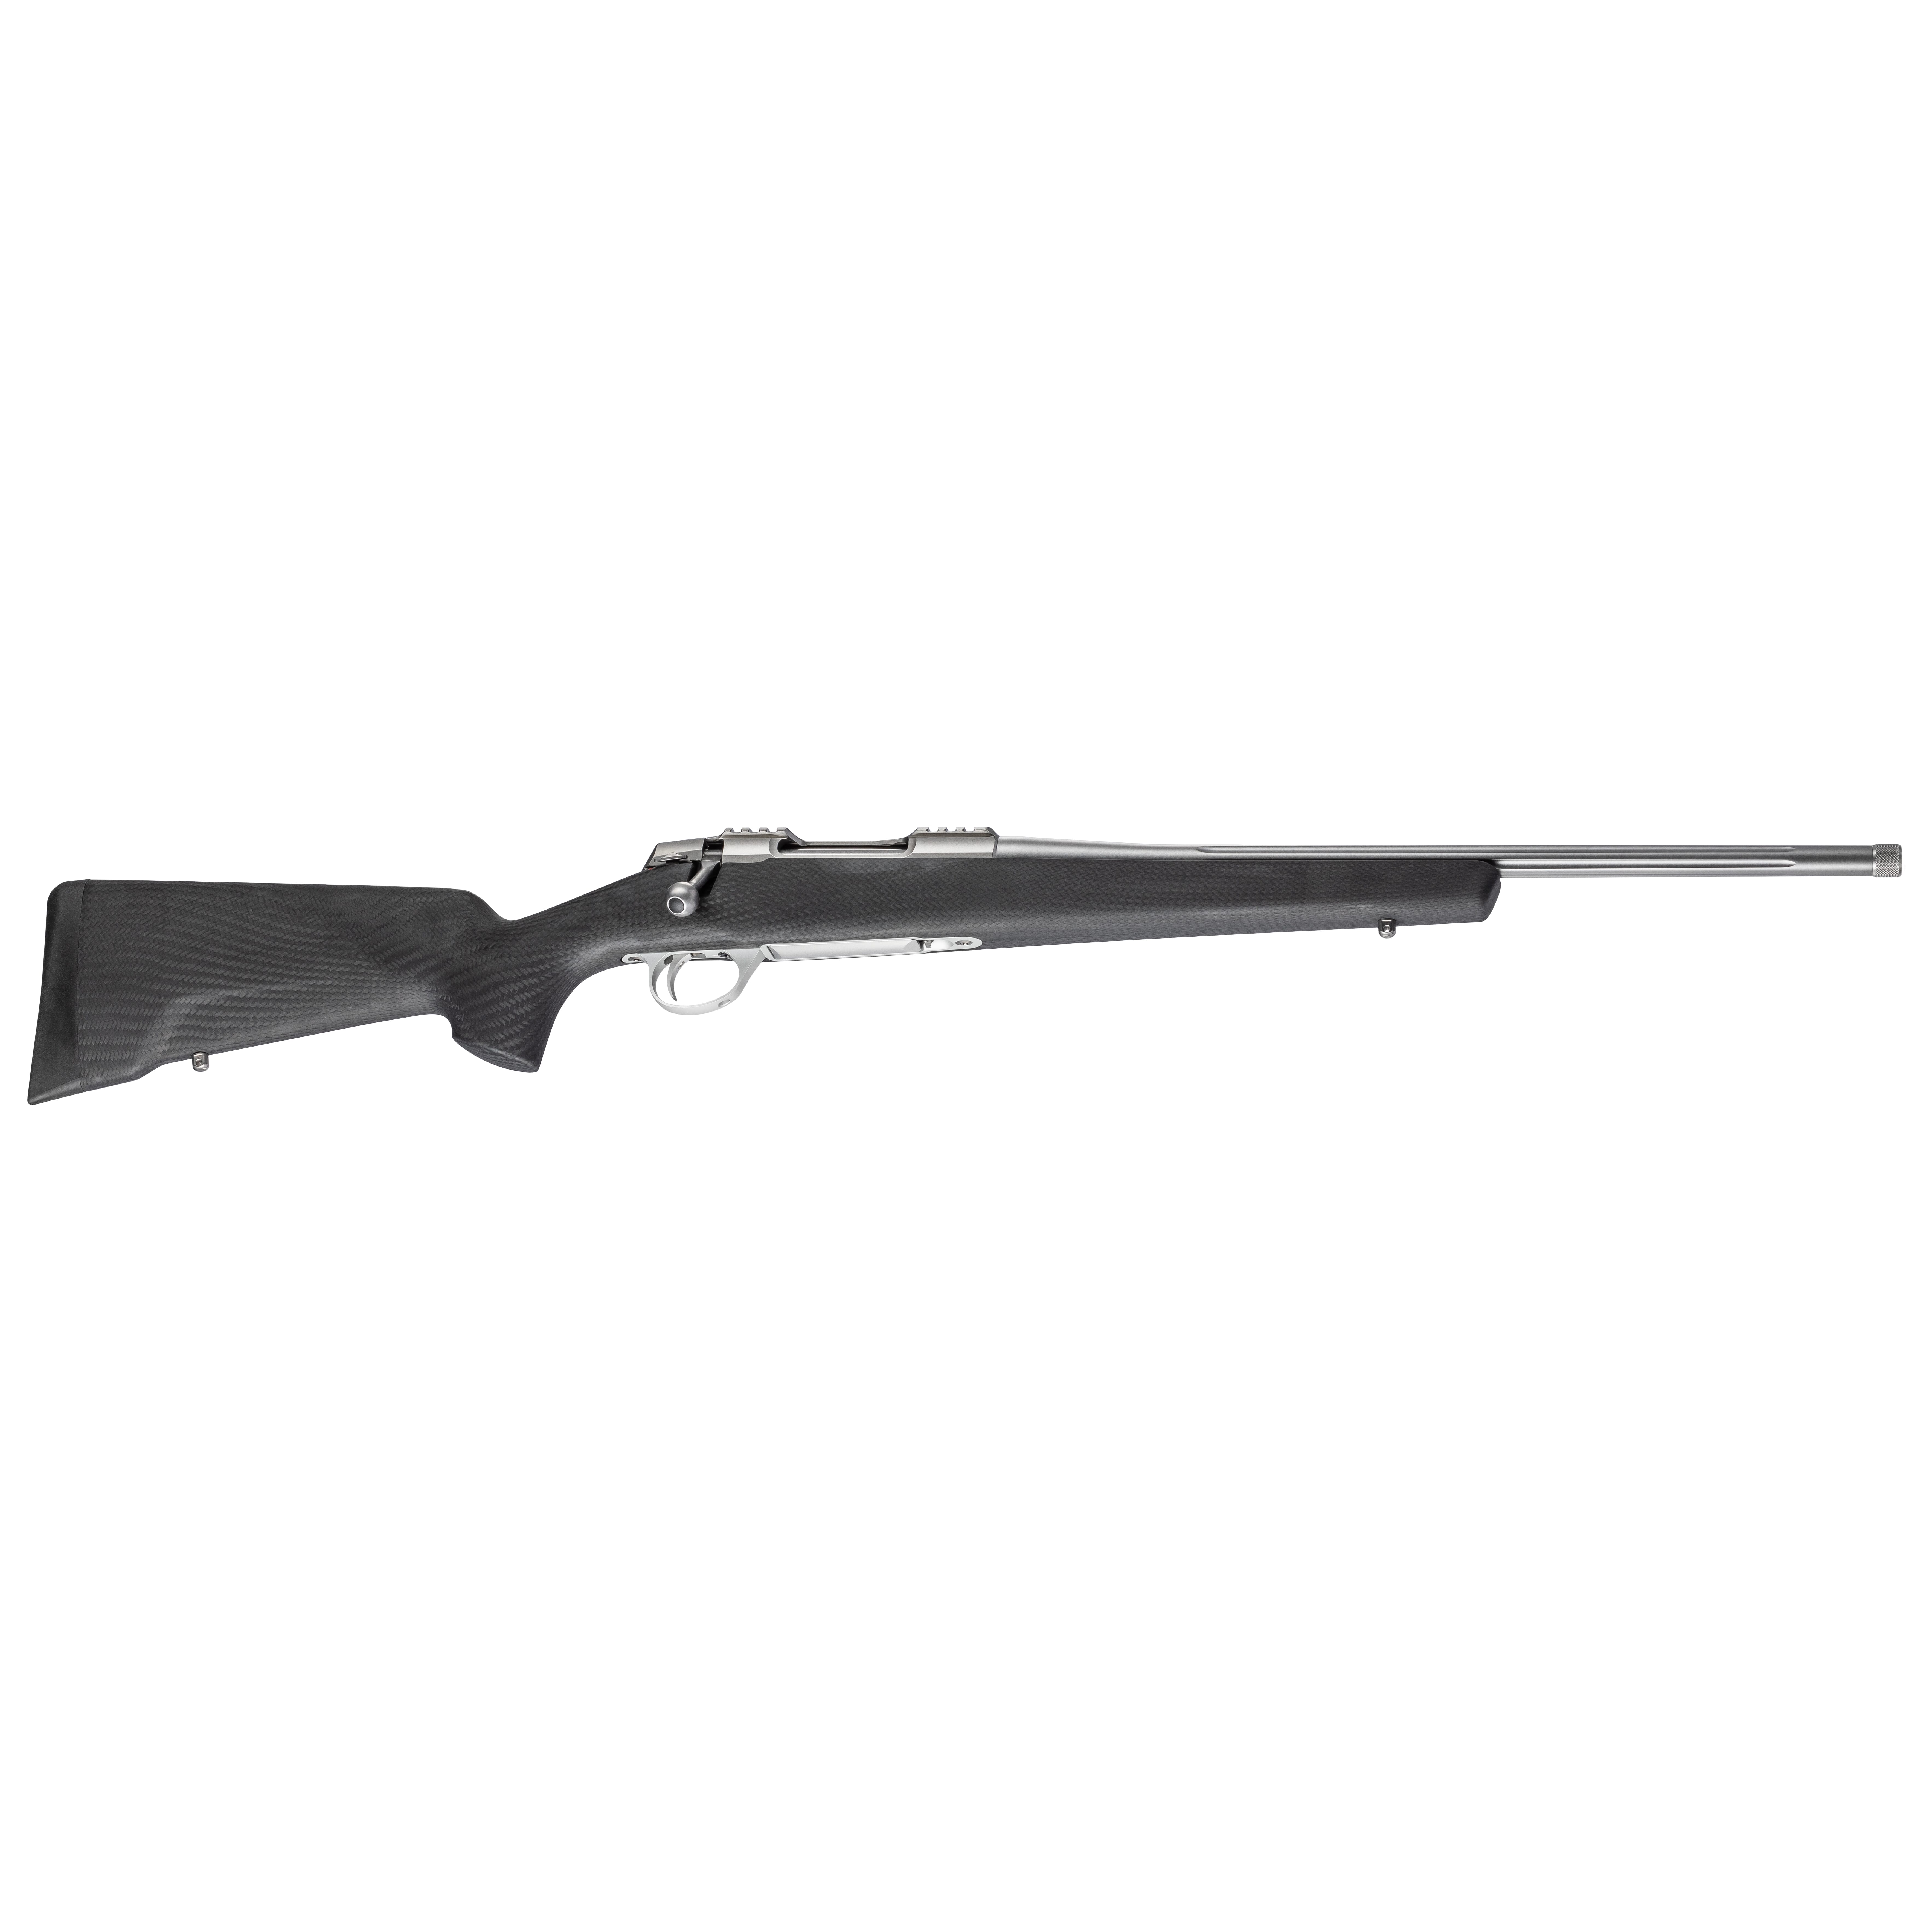 Sako 90 Peak 7mm Rem Mag 1:9.5" 24" Bbl RH Carbon Fiber Picatinny Rifle JRS90PEA370/24